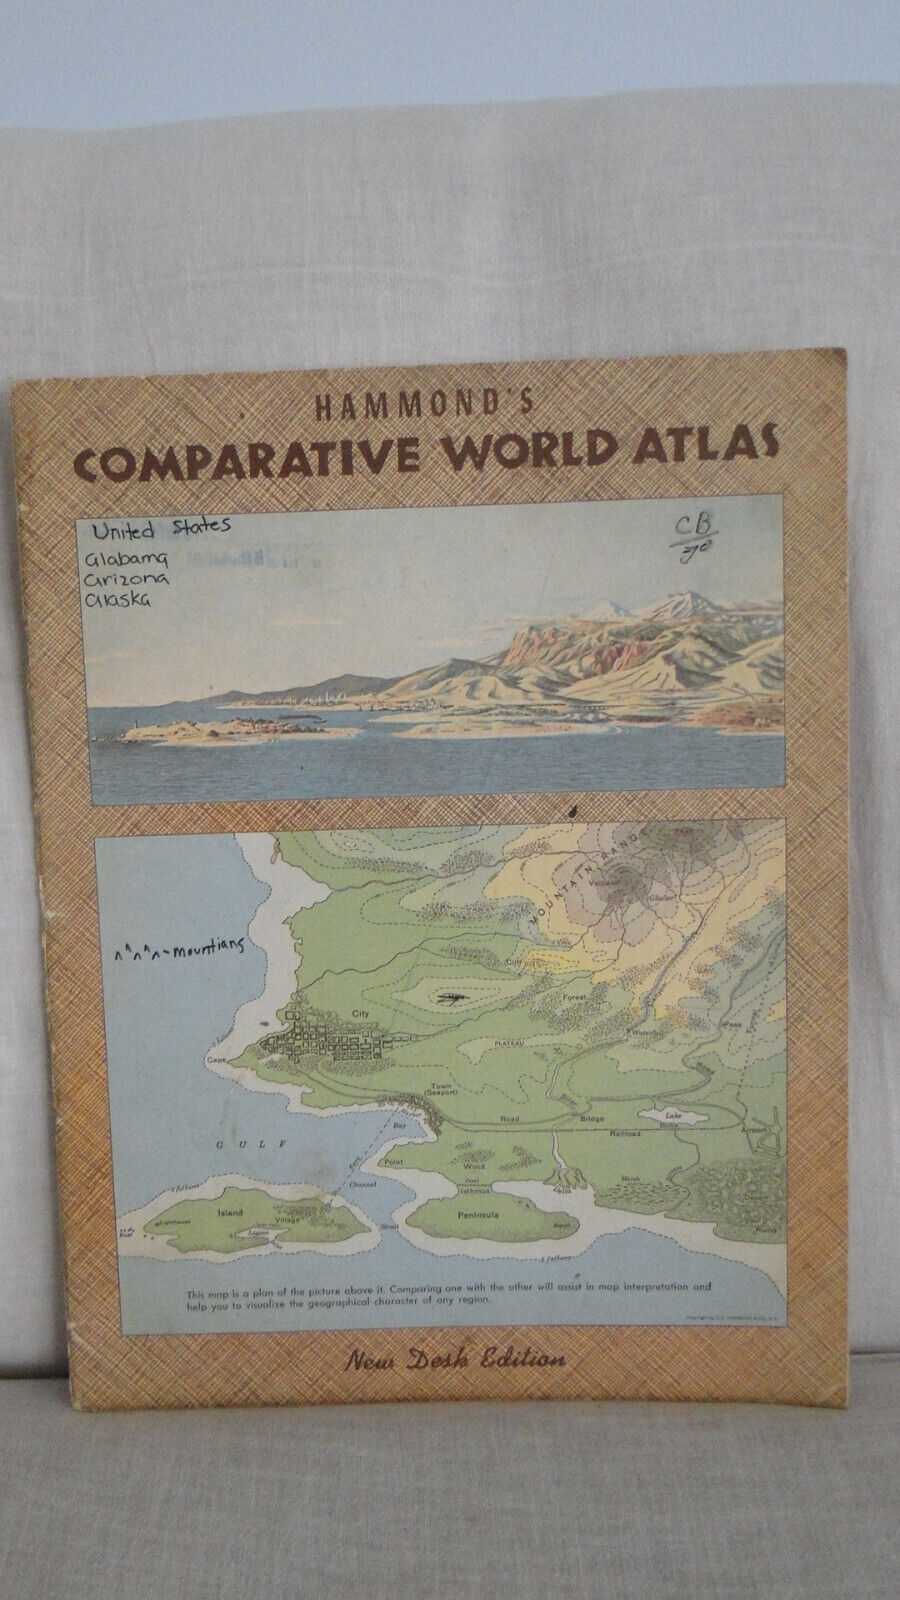 HAMMOND'S COMPARATIVE WORLD ATLAS - New Desk Edition 1956 pb